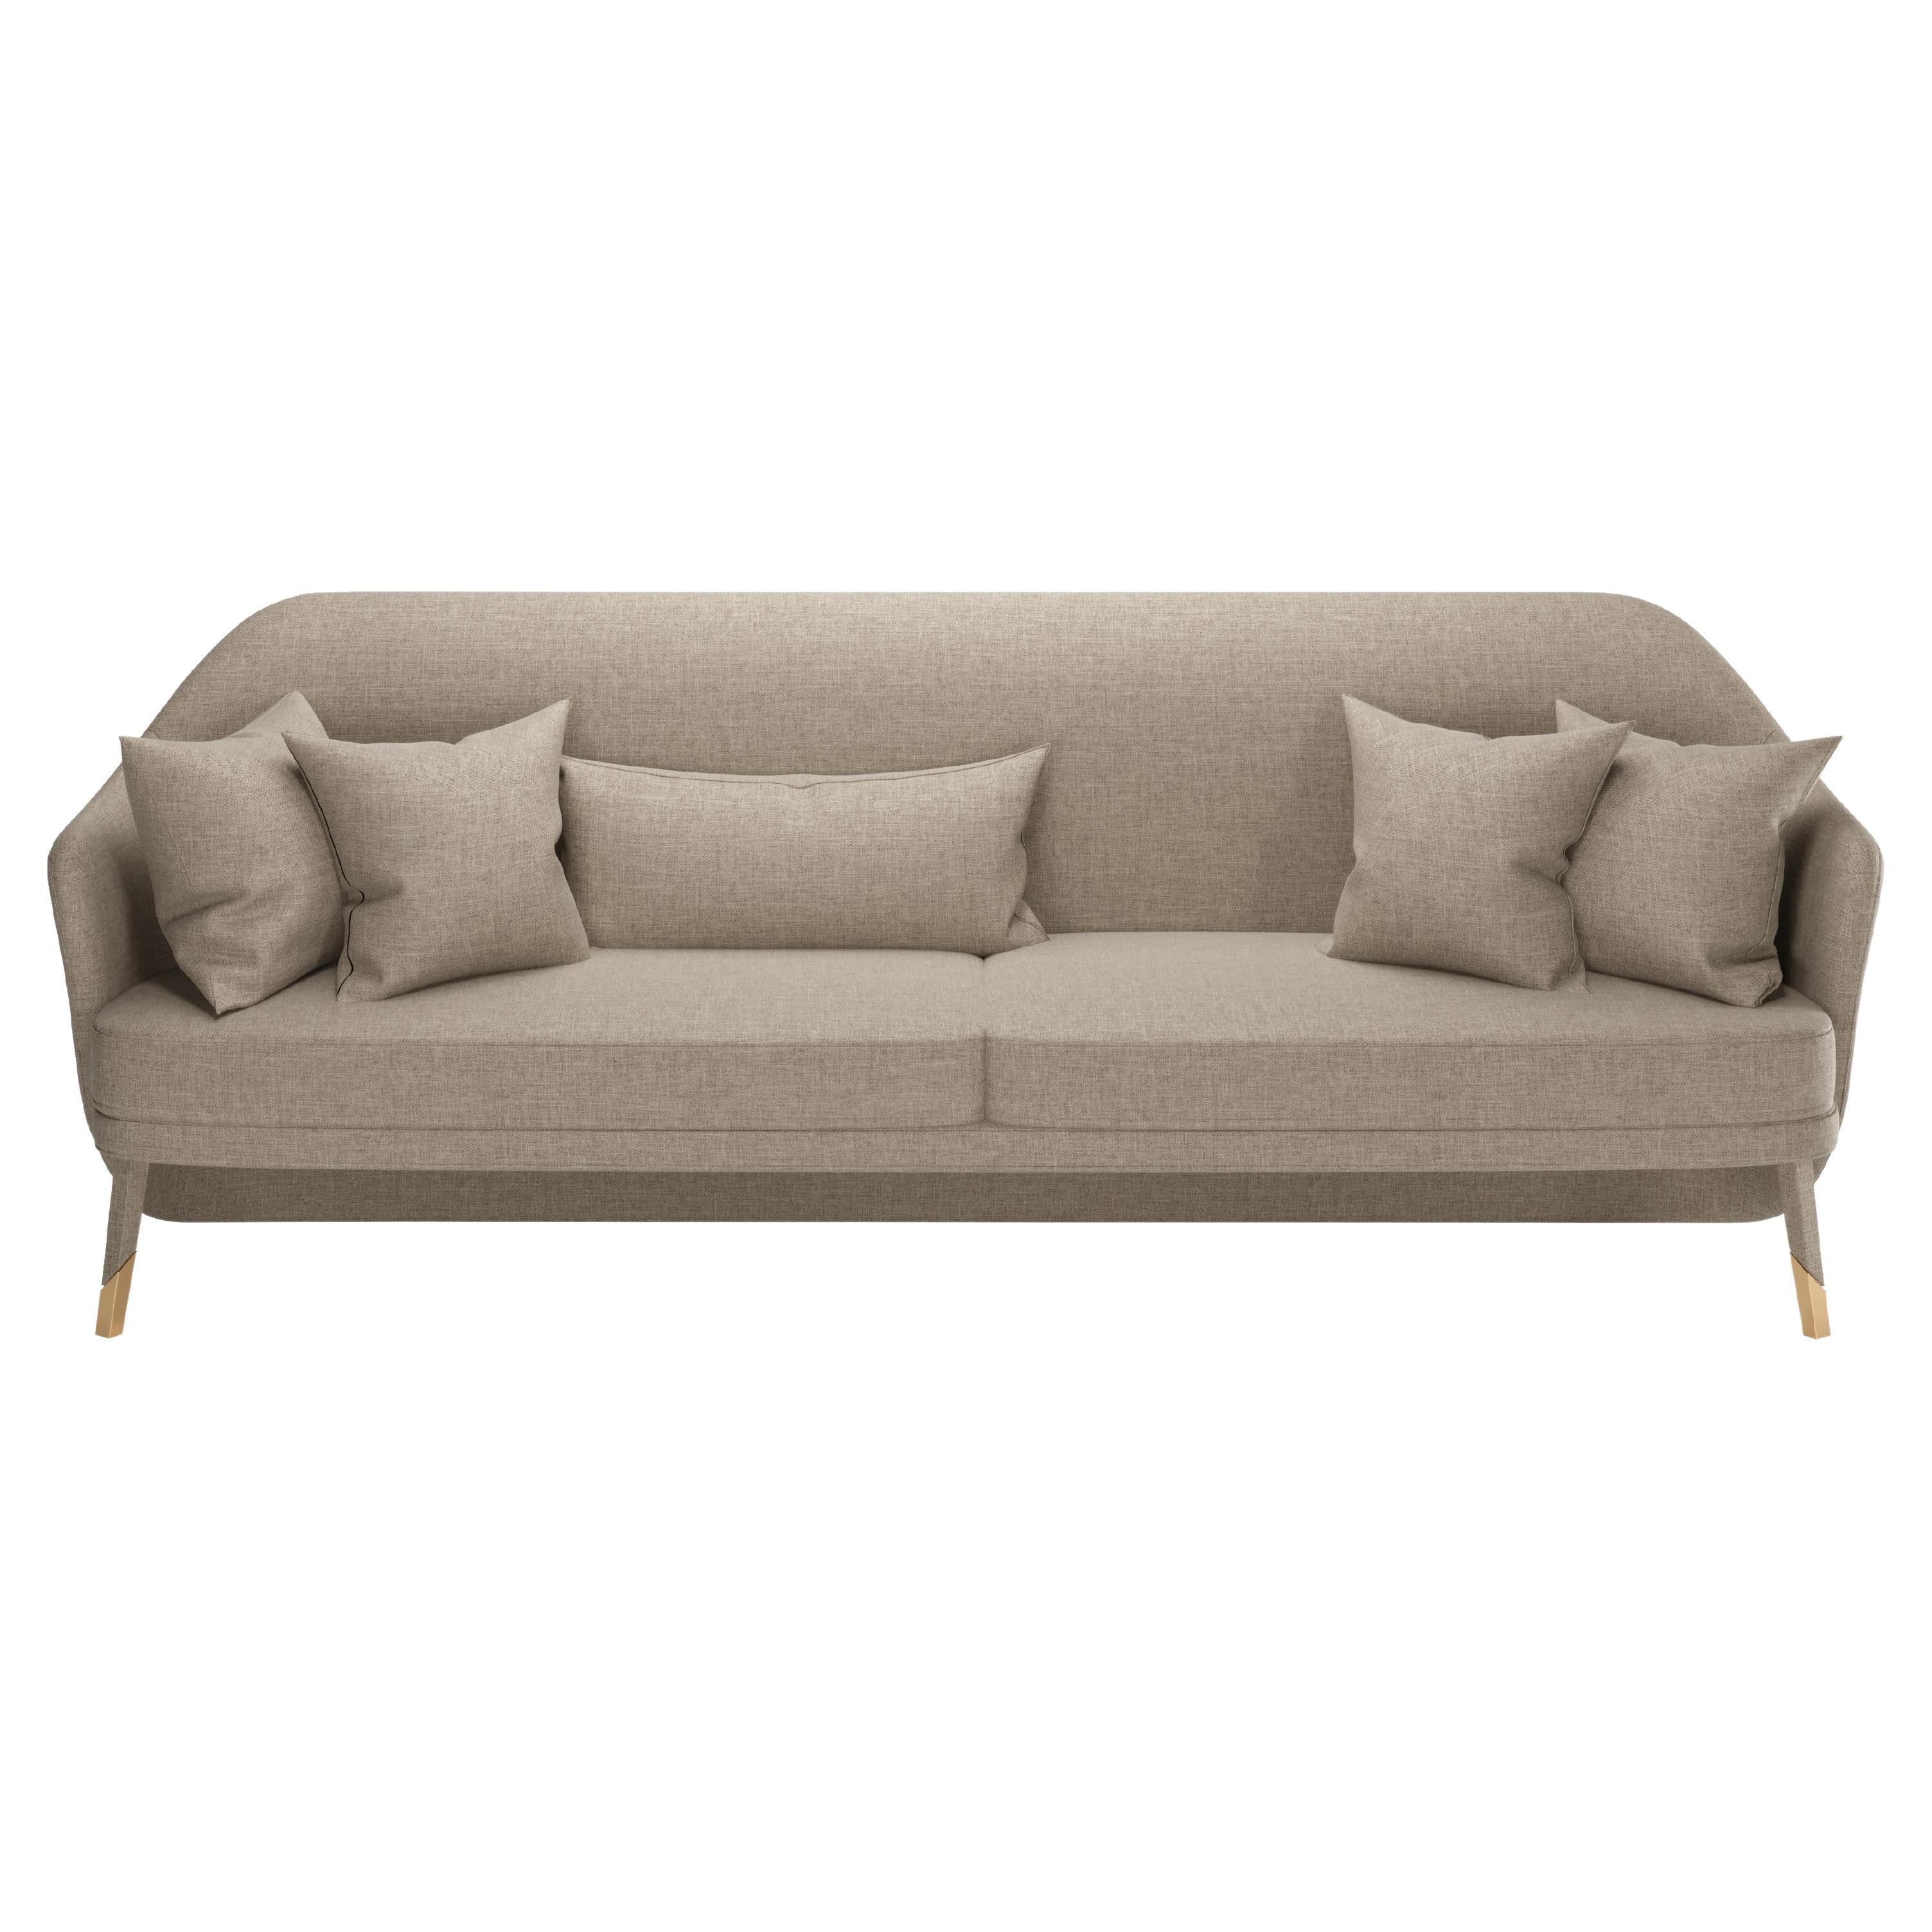 Greige Fabric Modern Bhutan Sofa For Sale